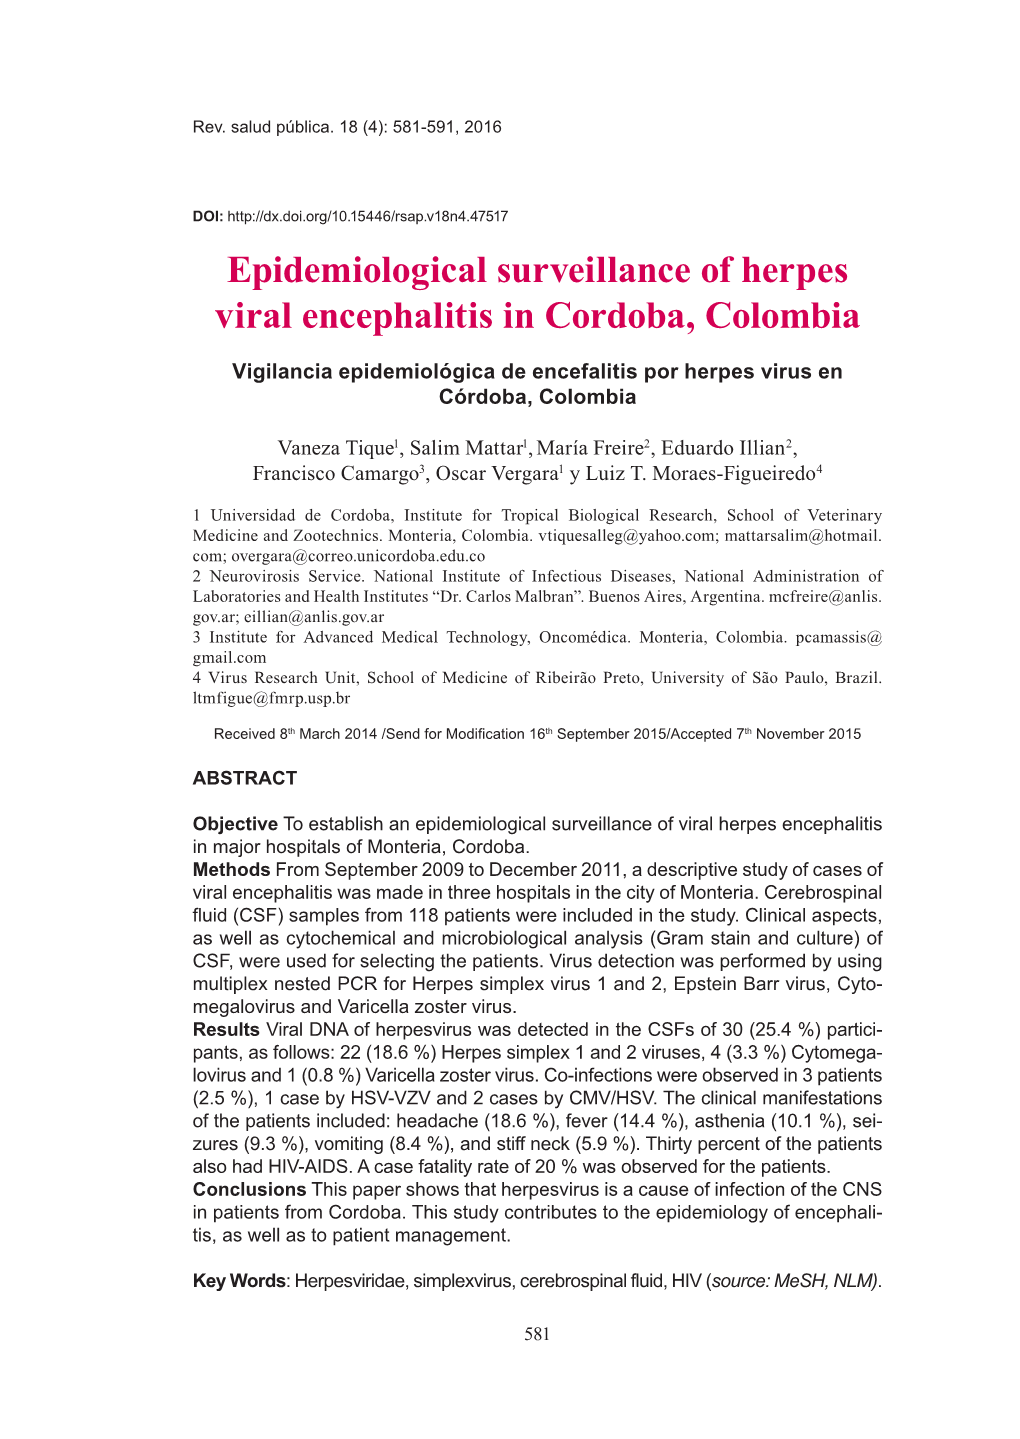 Epidemiological Surveillance of Herpes Viral Encephalitis in Cordoba, Colombia